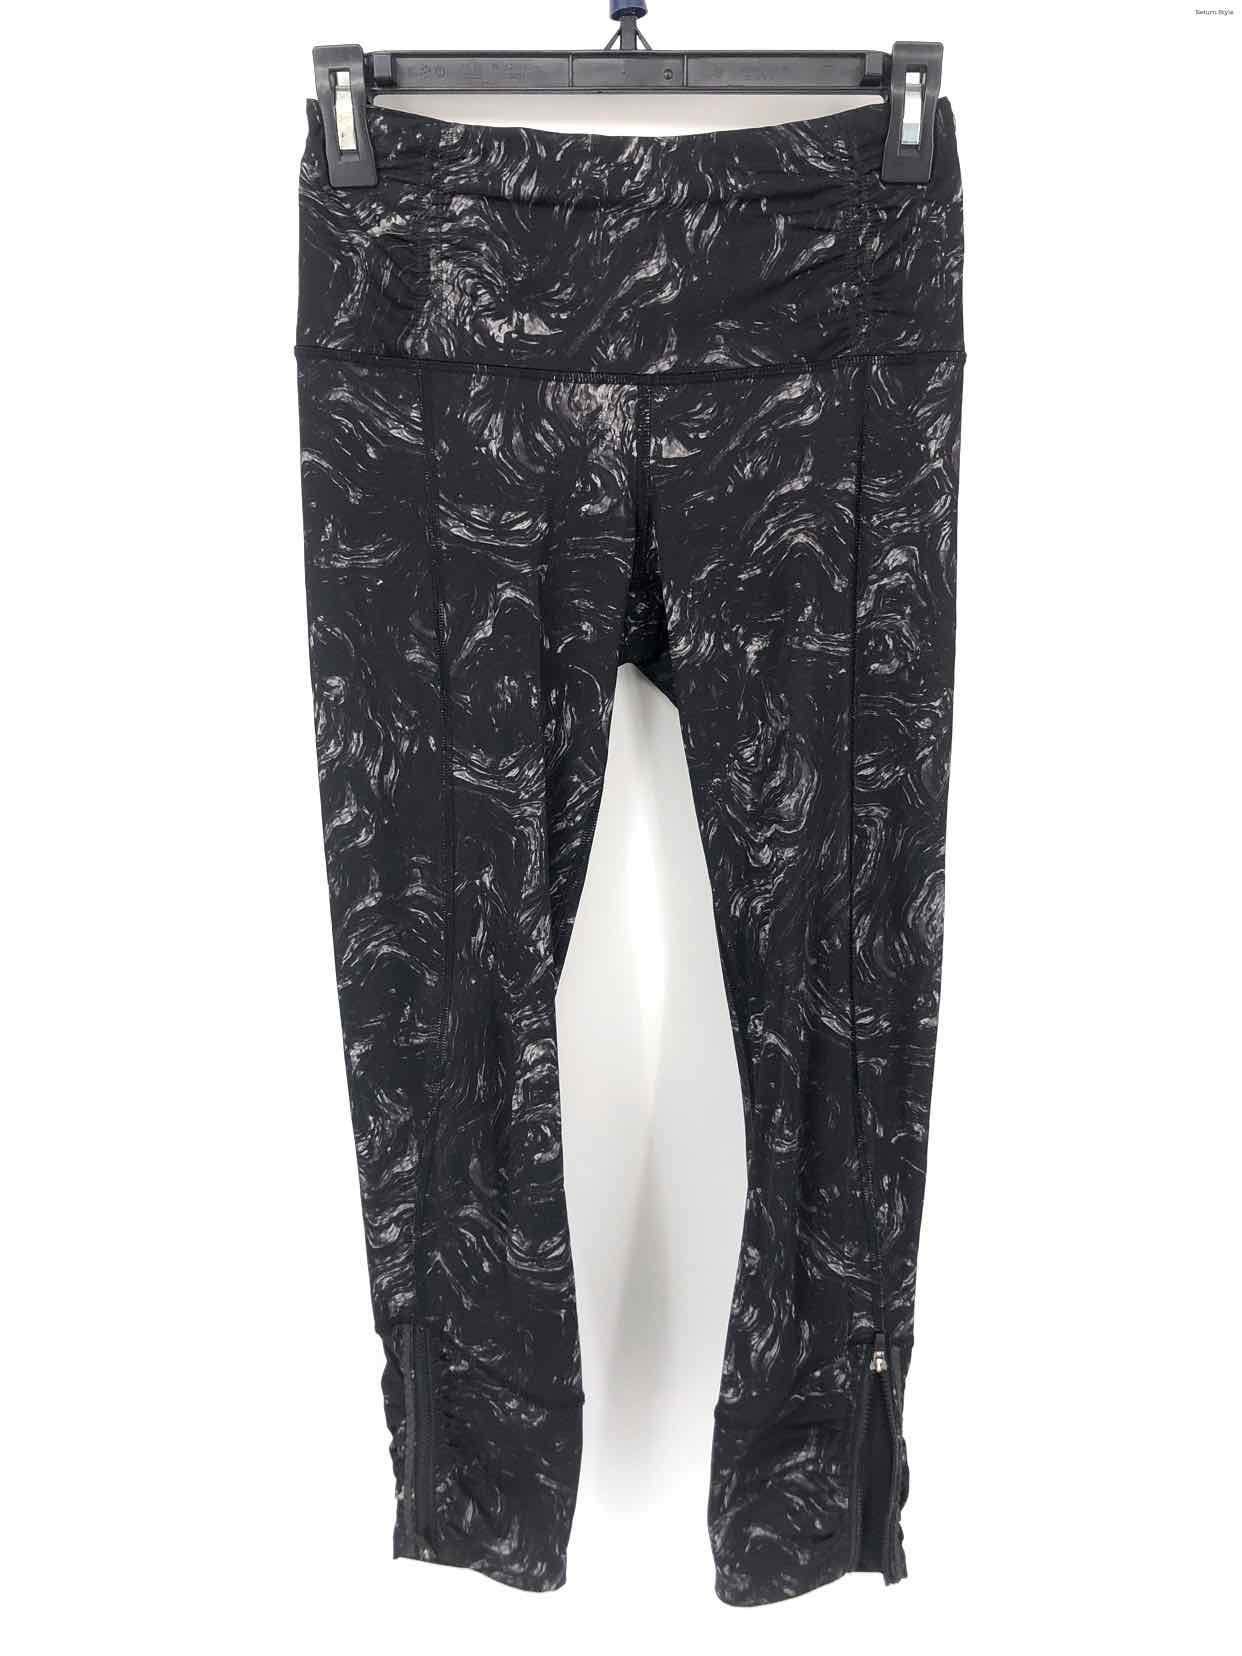 LULULEMON Black Gray Marble Print 7/8 Length Size 4 (S) Activewear